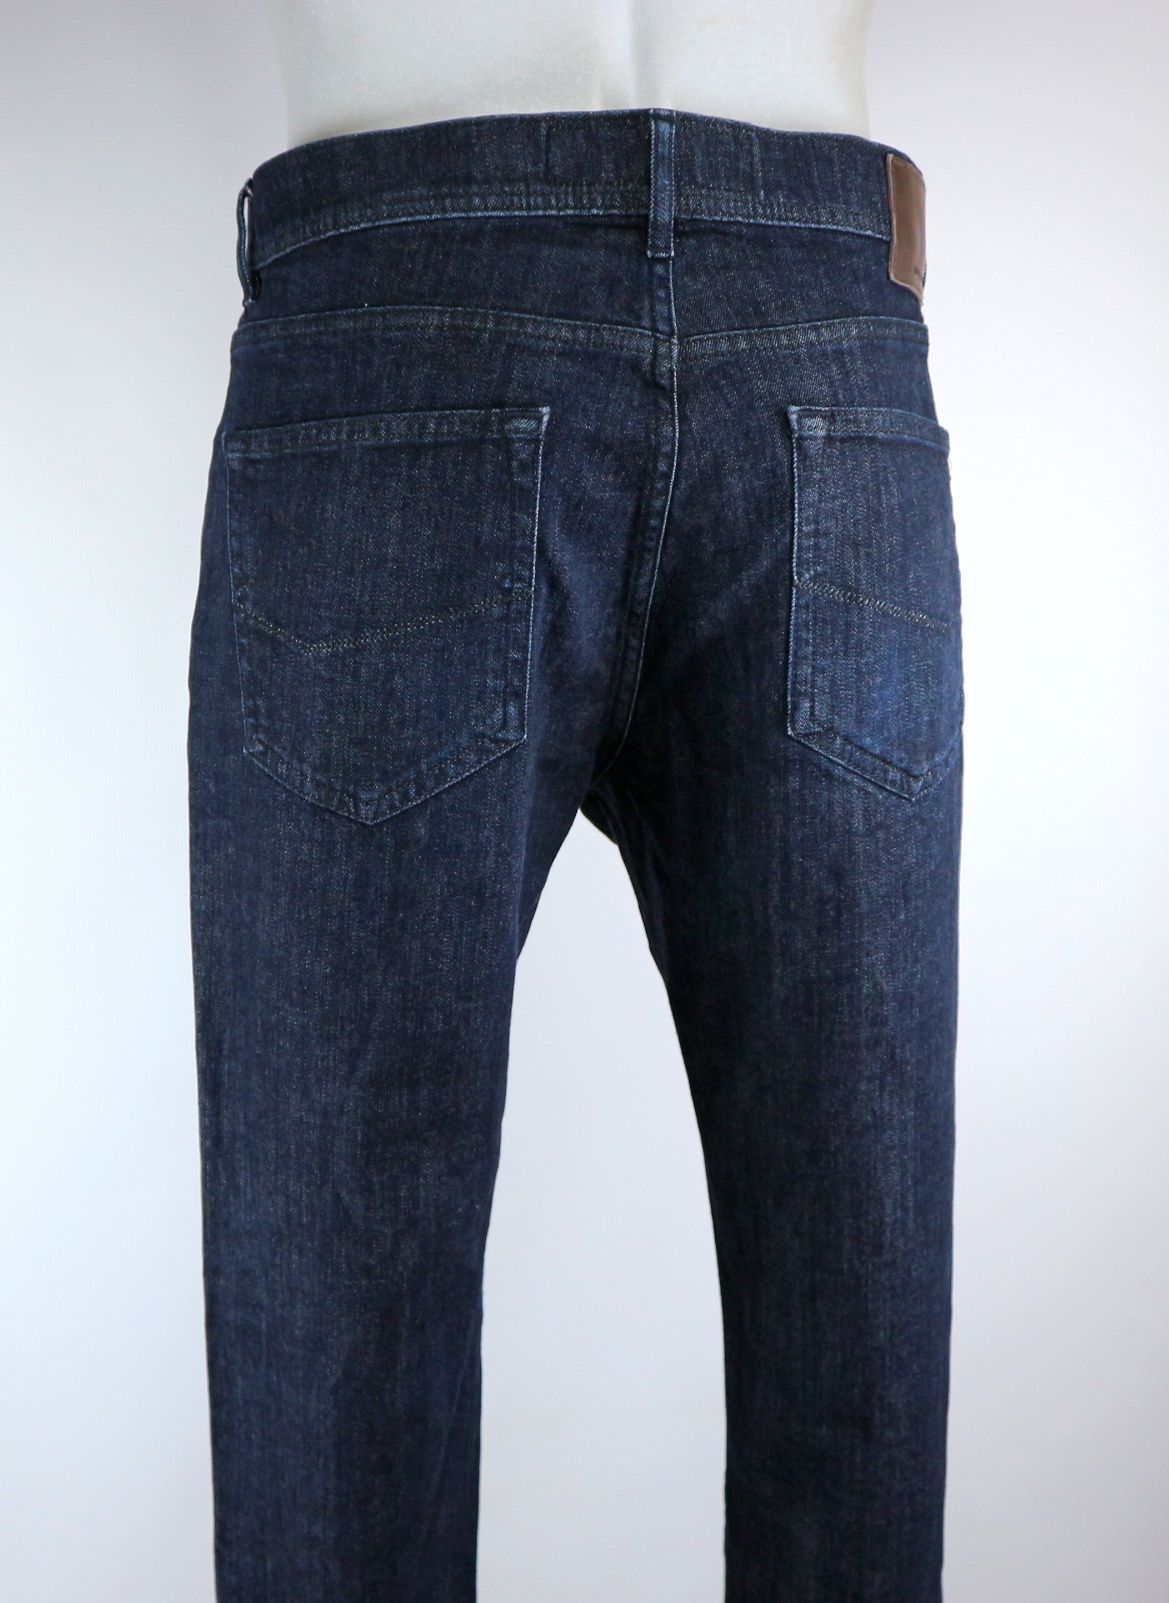 Pierre Cardin Pierre Cardin Lyon Fit jeans W38 L32 Size US 38 / EU 54 - 3 Thumbnail